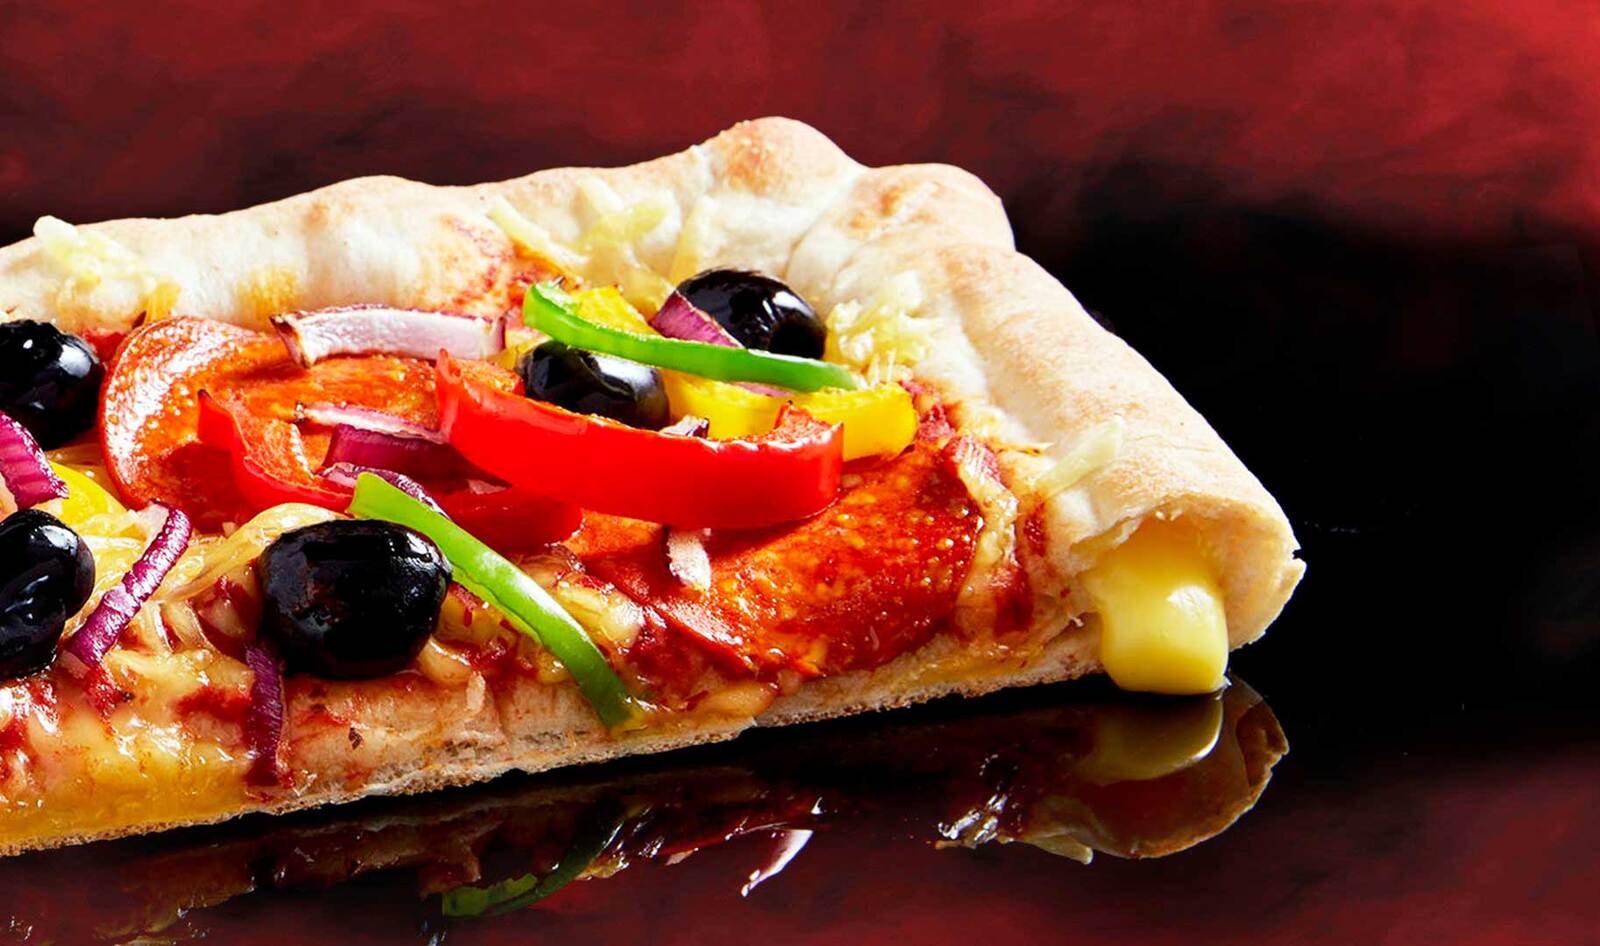 Pizza Hut Just Launched Vegan Stuffed-Crust Pizza in UK